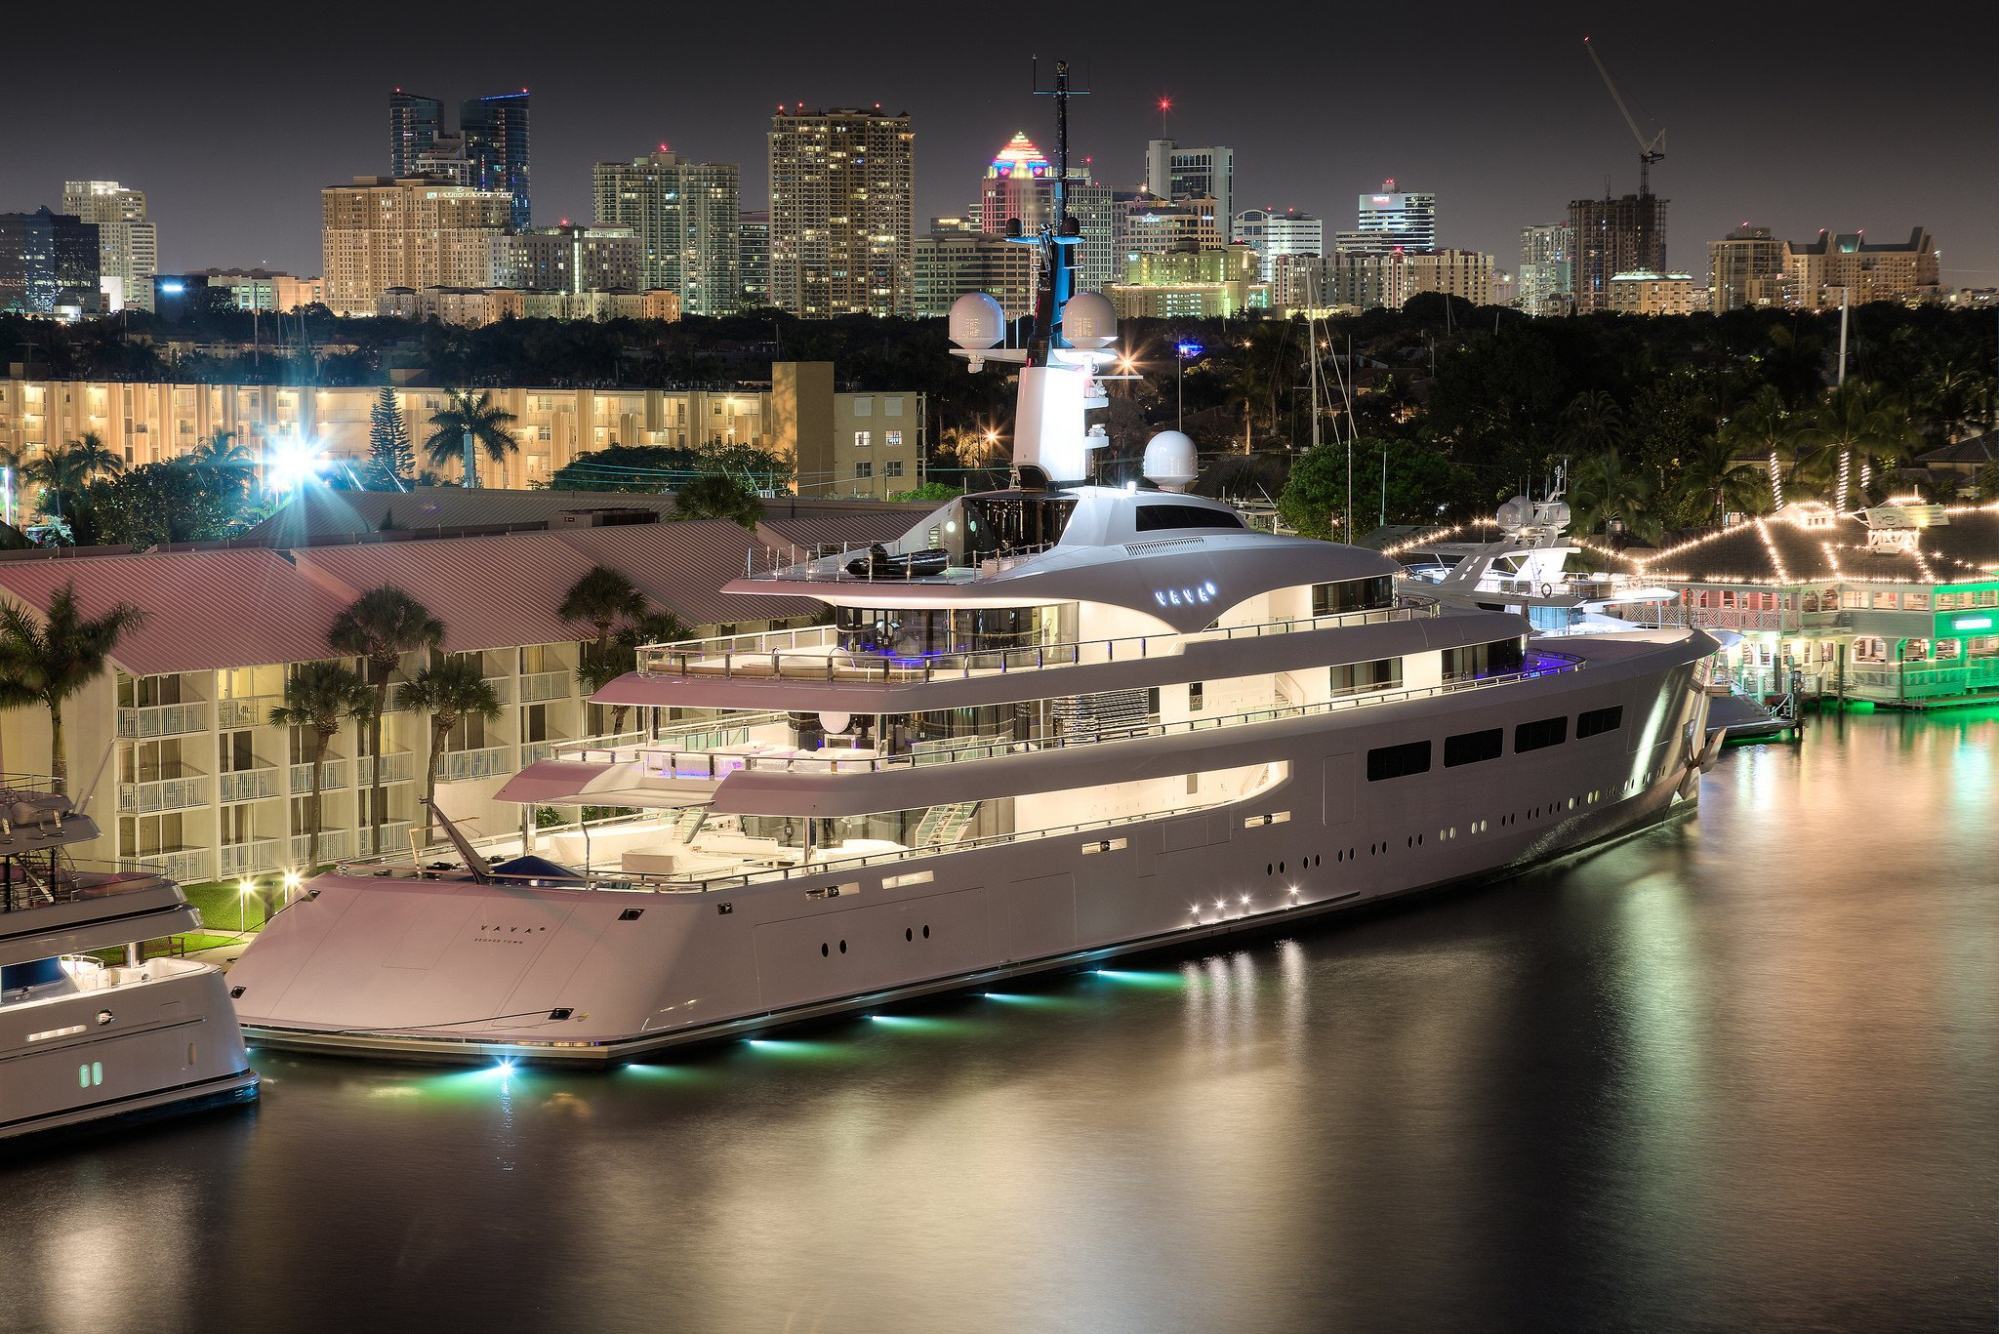 A photo of Ernesto and Kirsty Bertarelli’s luxury yacht, The Vava II. Photo: @Superyachtfan/Twitter